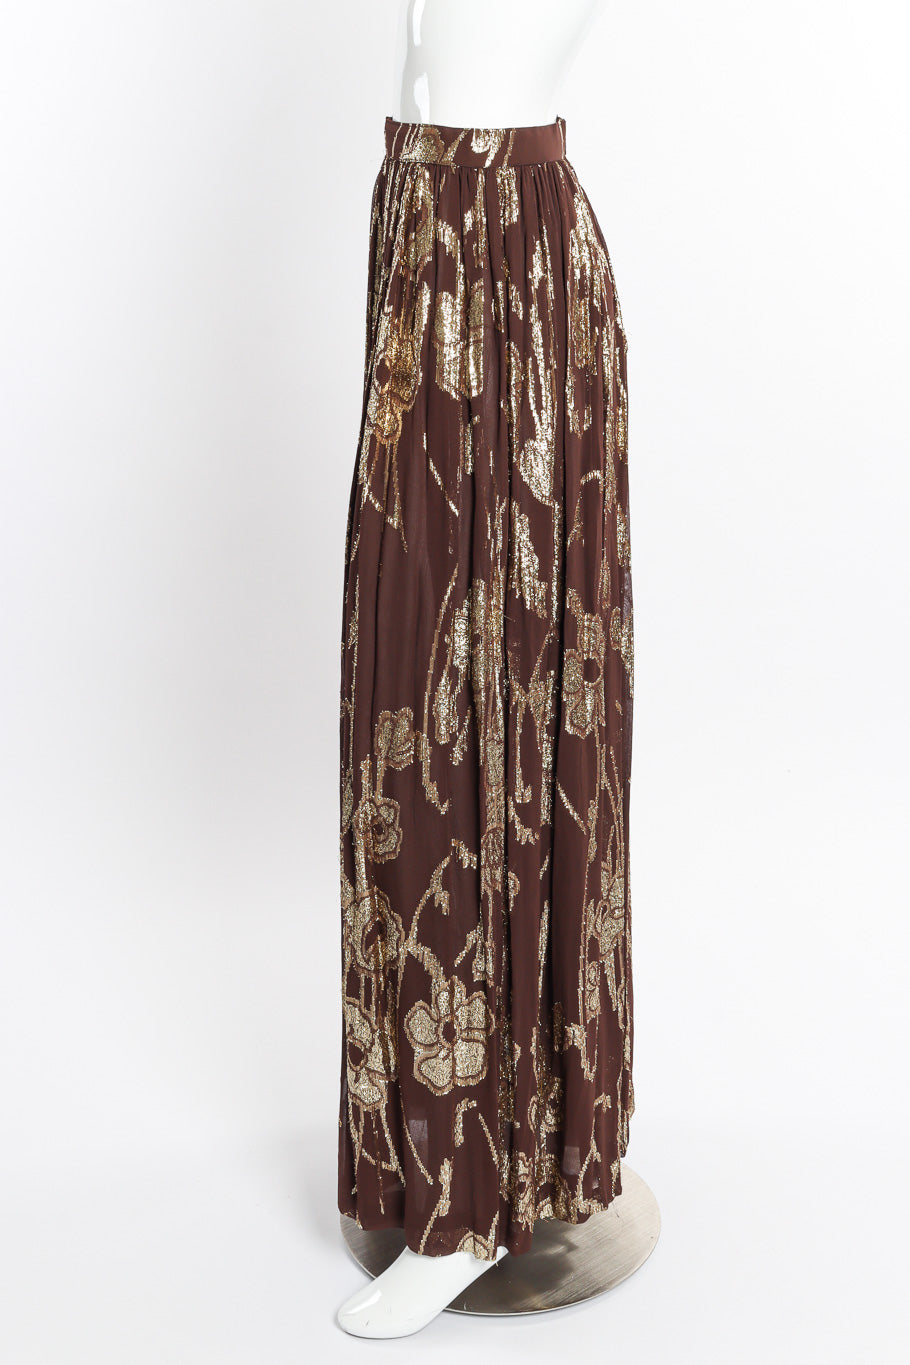 Vintage Adolfo Metallic Top and Skirt Set skirt side on mannequin @recessla